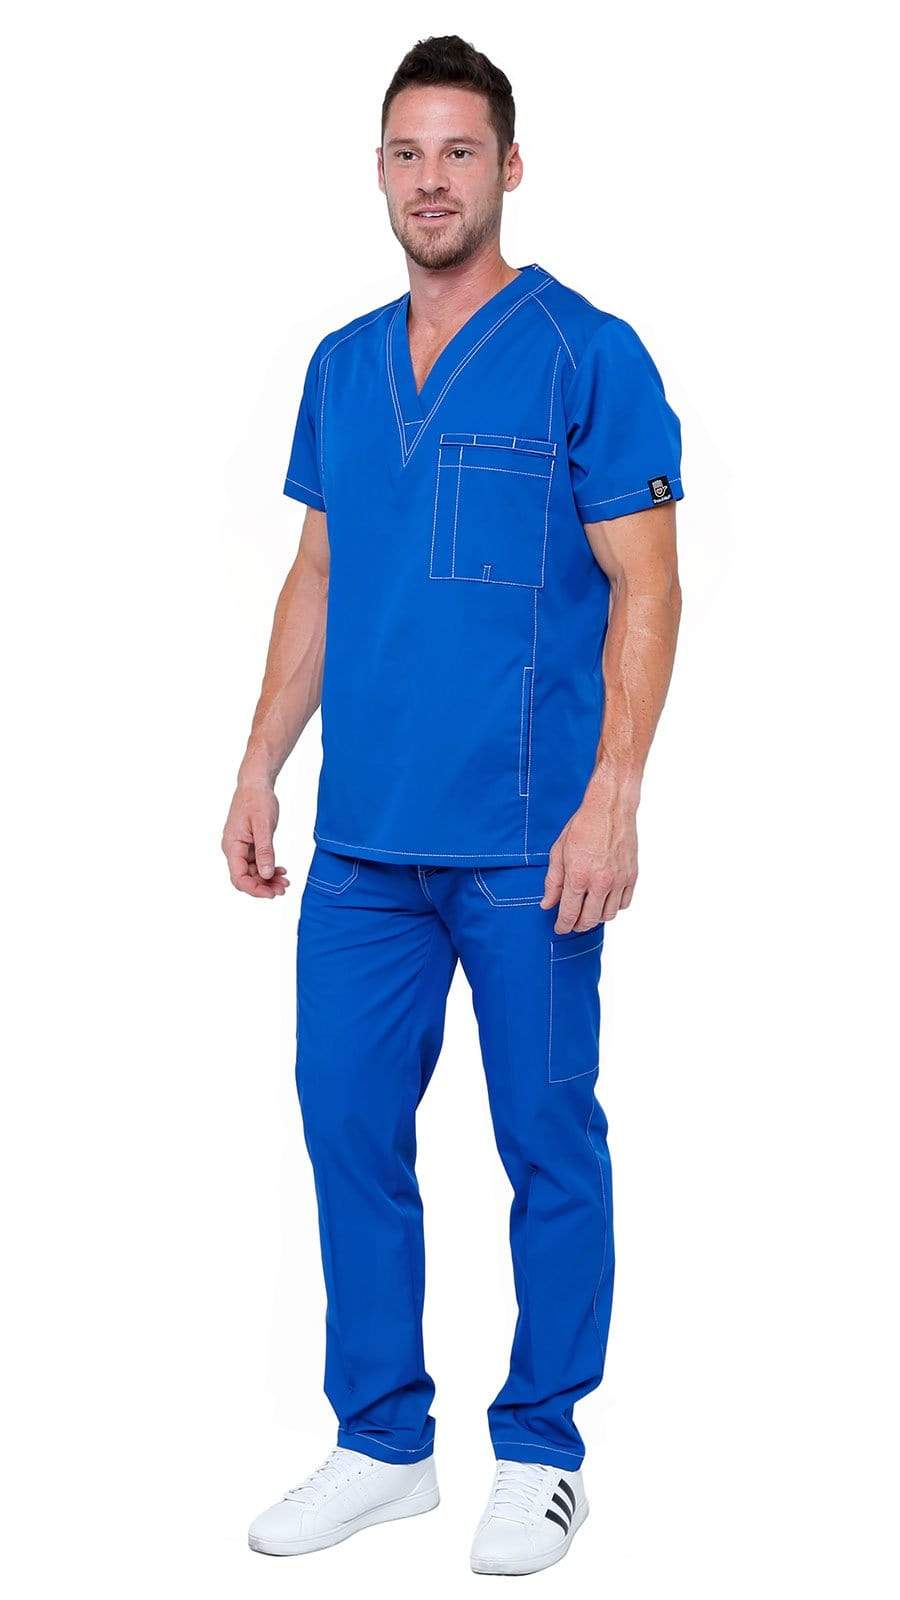 Men's 5-Pocket Sky Blue Scrub Suit